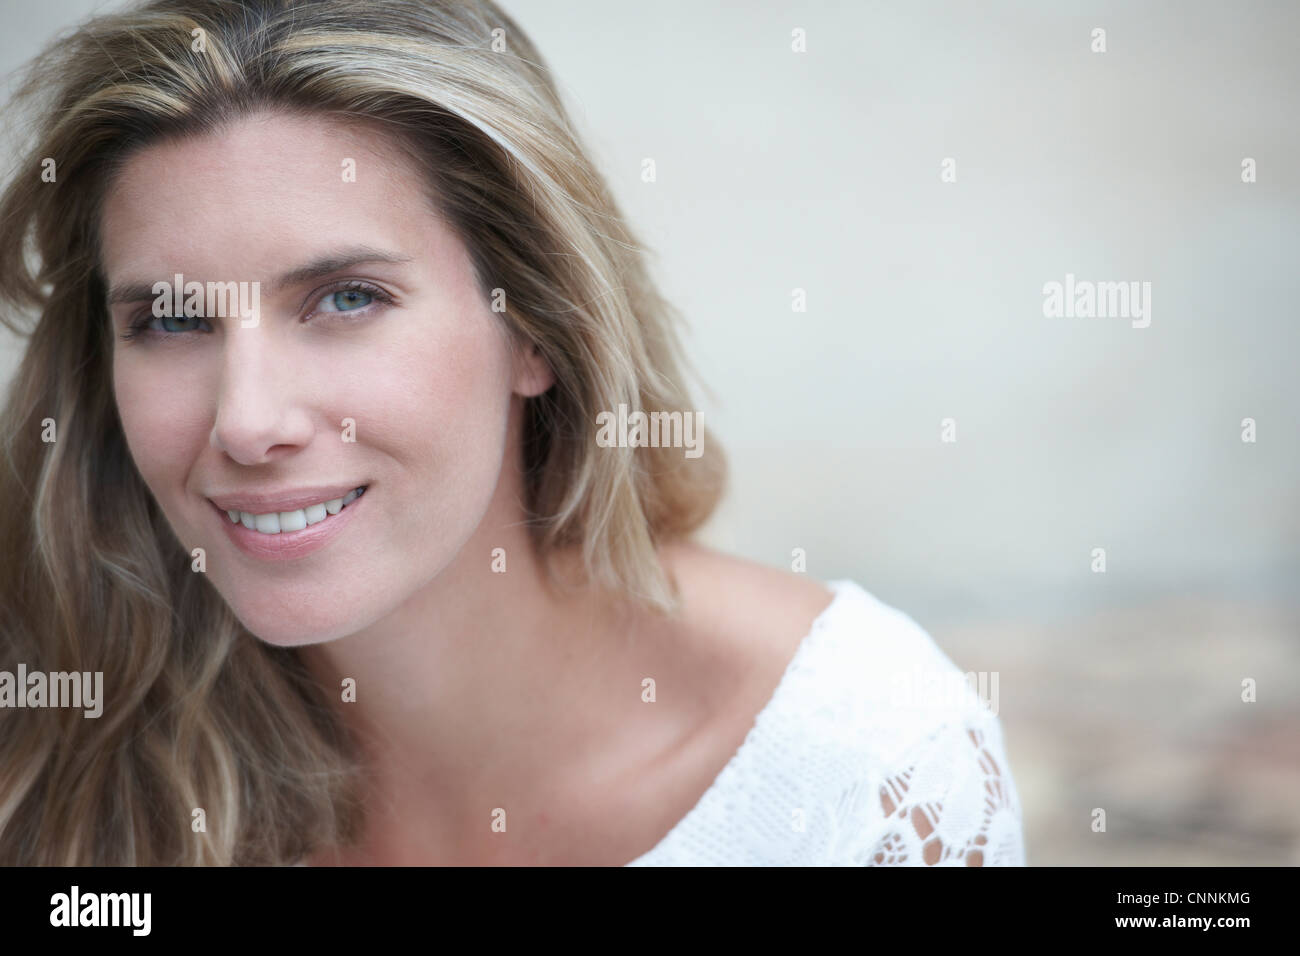 Close up of woman's face Banque D'Images